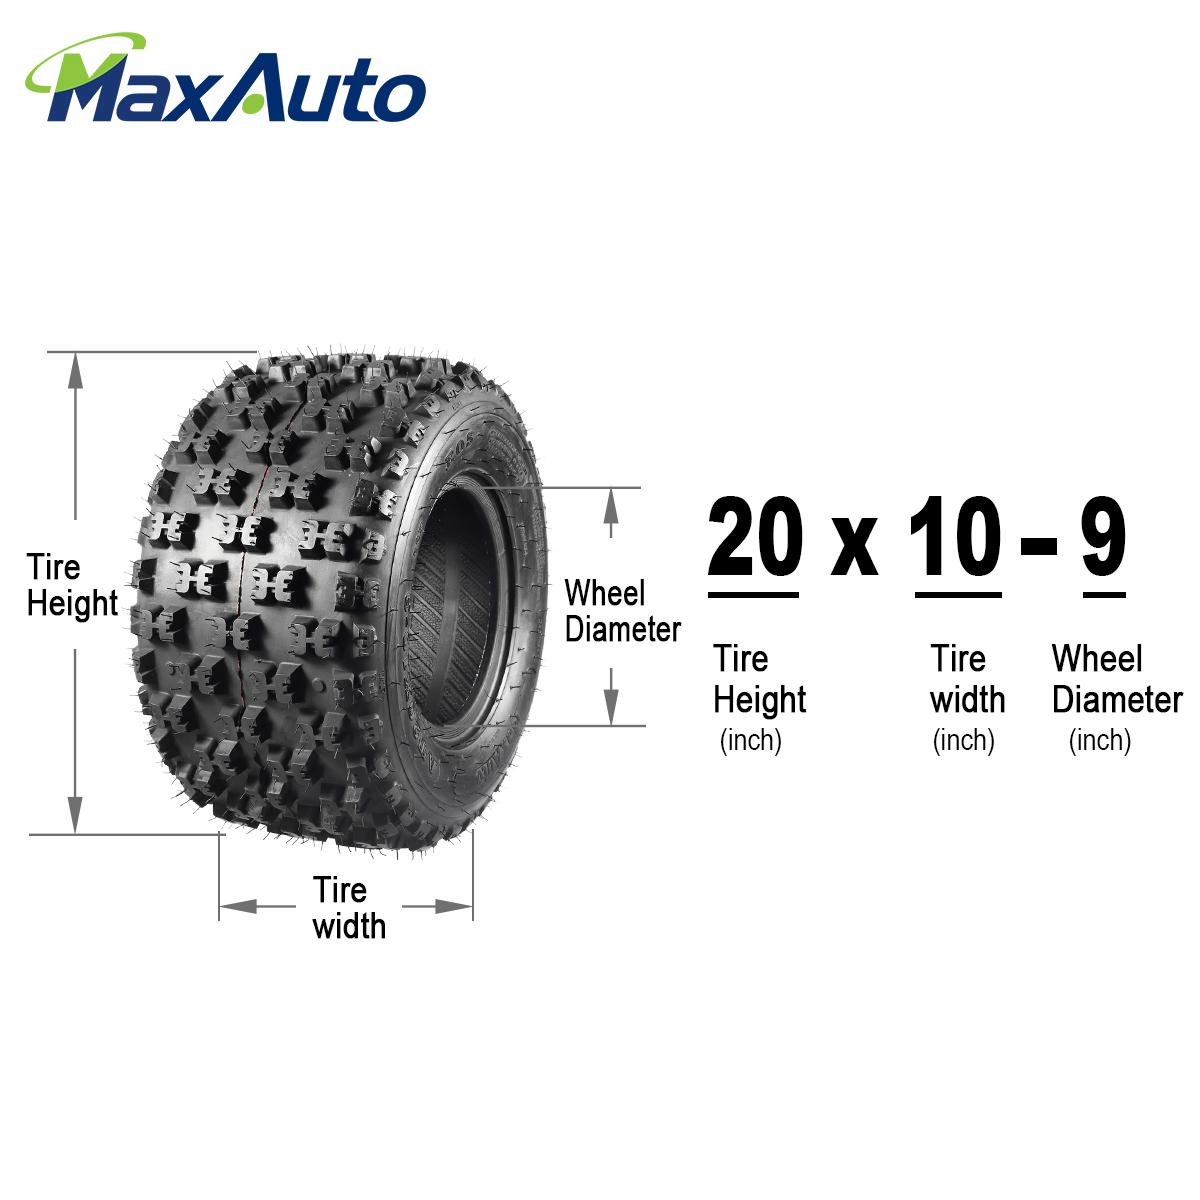 Set of 2 MaxAuto 20x10-9 ATV Tires 20x10x9 Rear Quad Sport Tires All Terrain UTV Tires 20x10.00-9 Tubeless 6PR Mud Sand Snow Tires - image 2 of 6